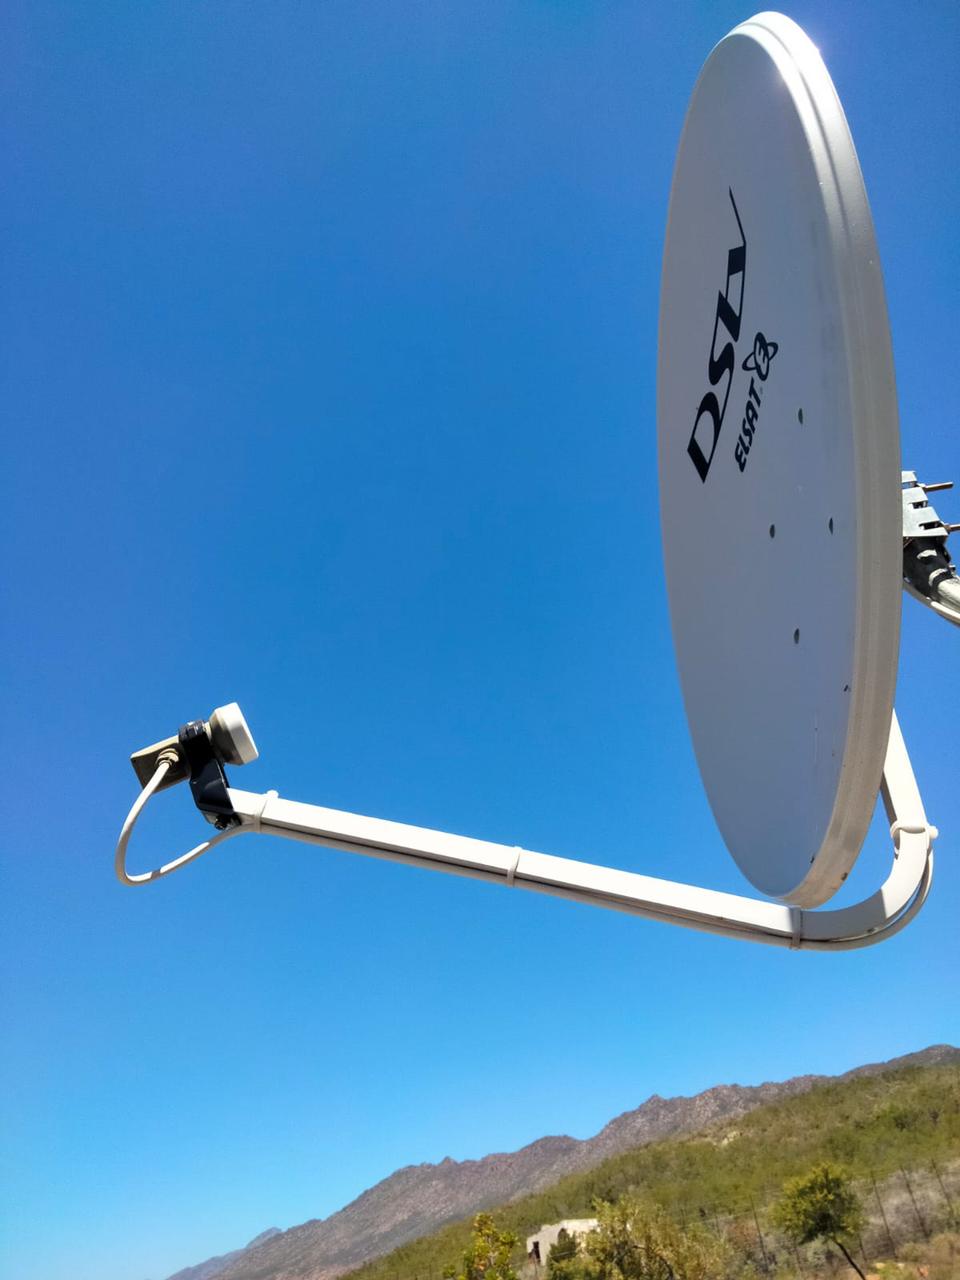 Satellite Dish Repairs